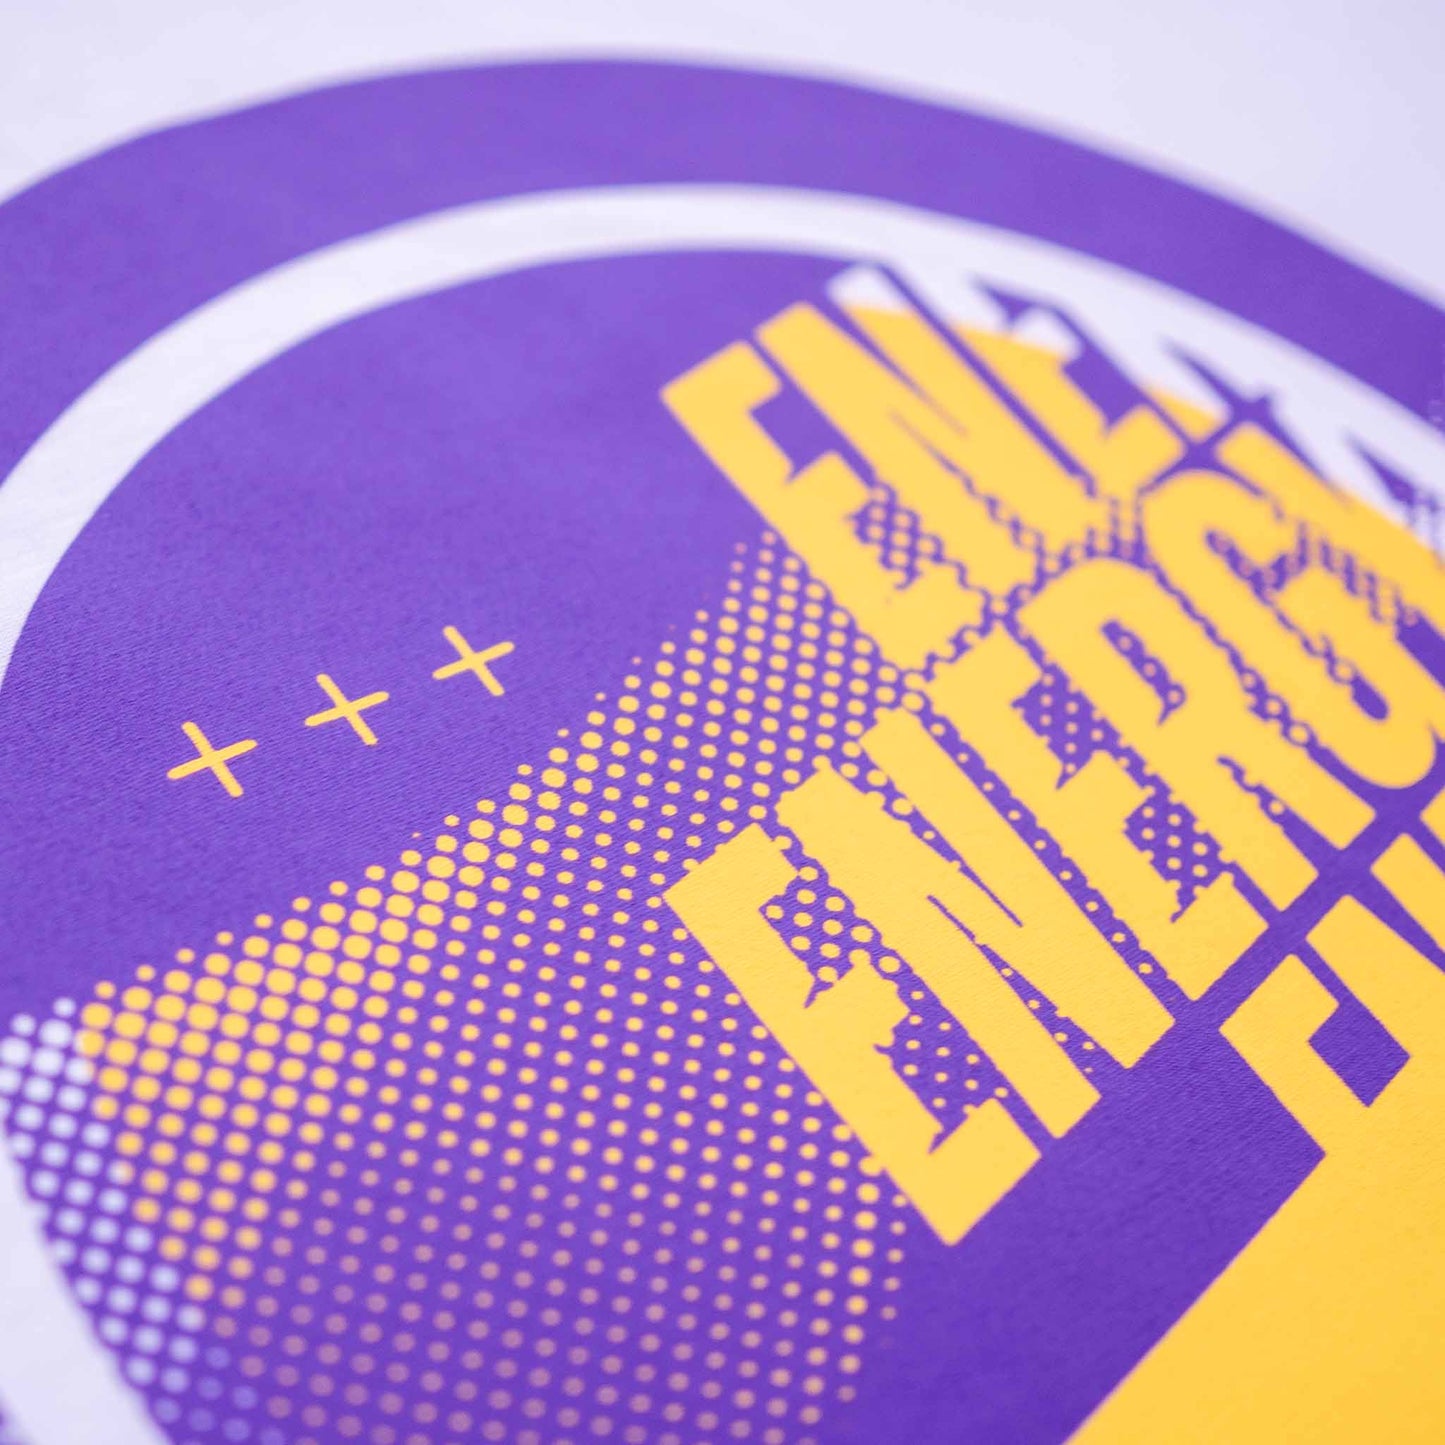 Energy T-shirt Design close up graphic print